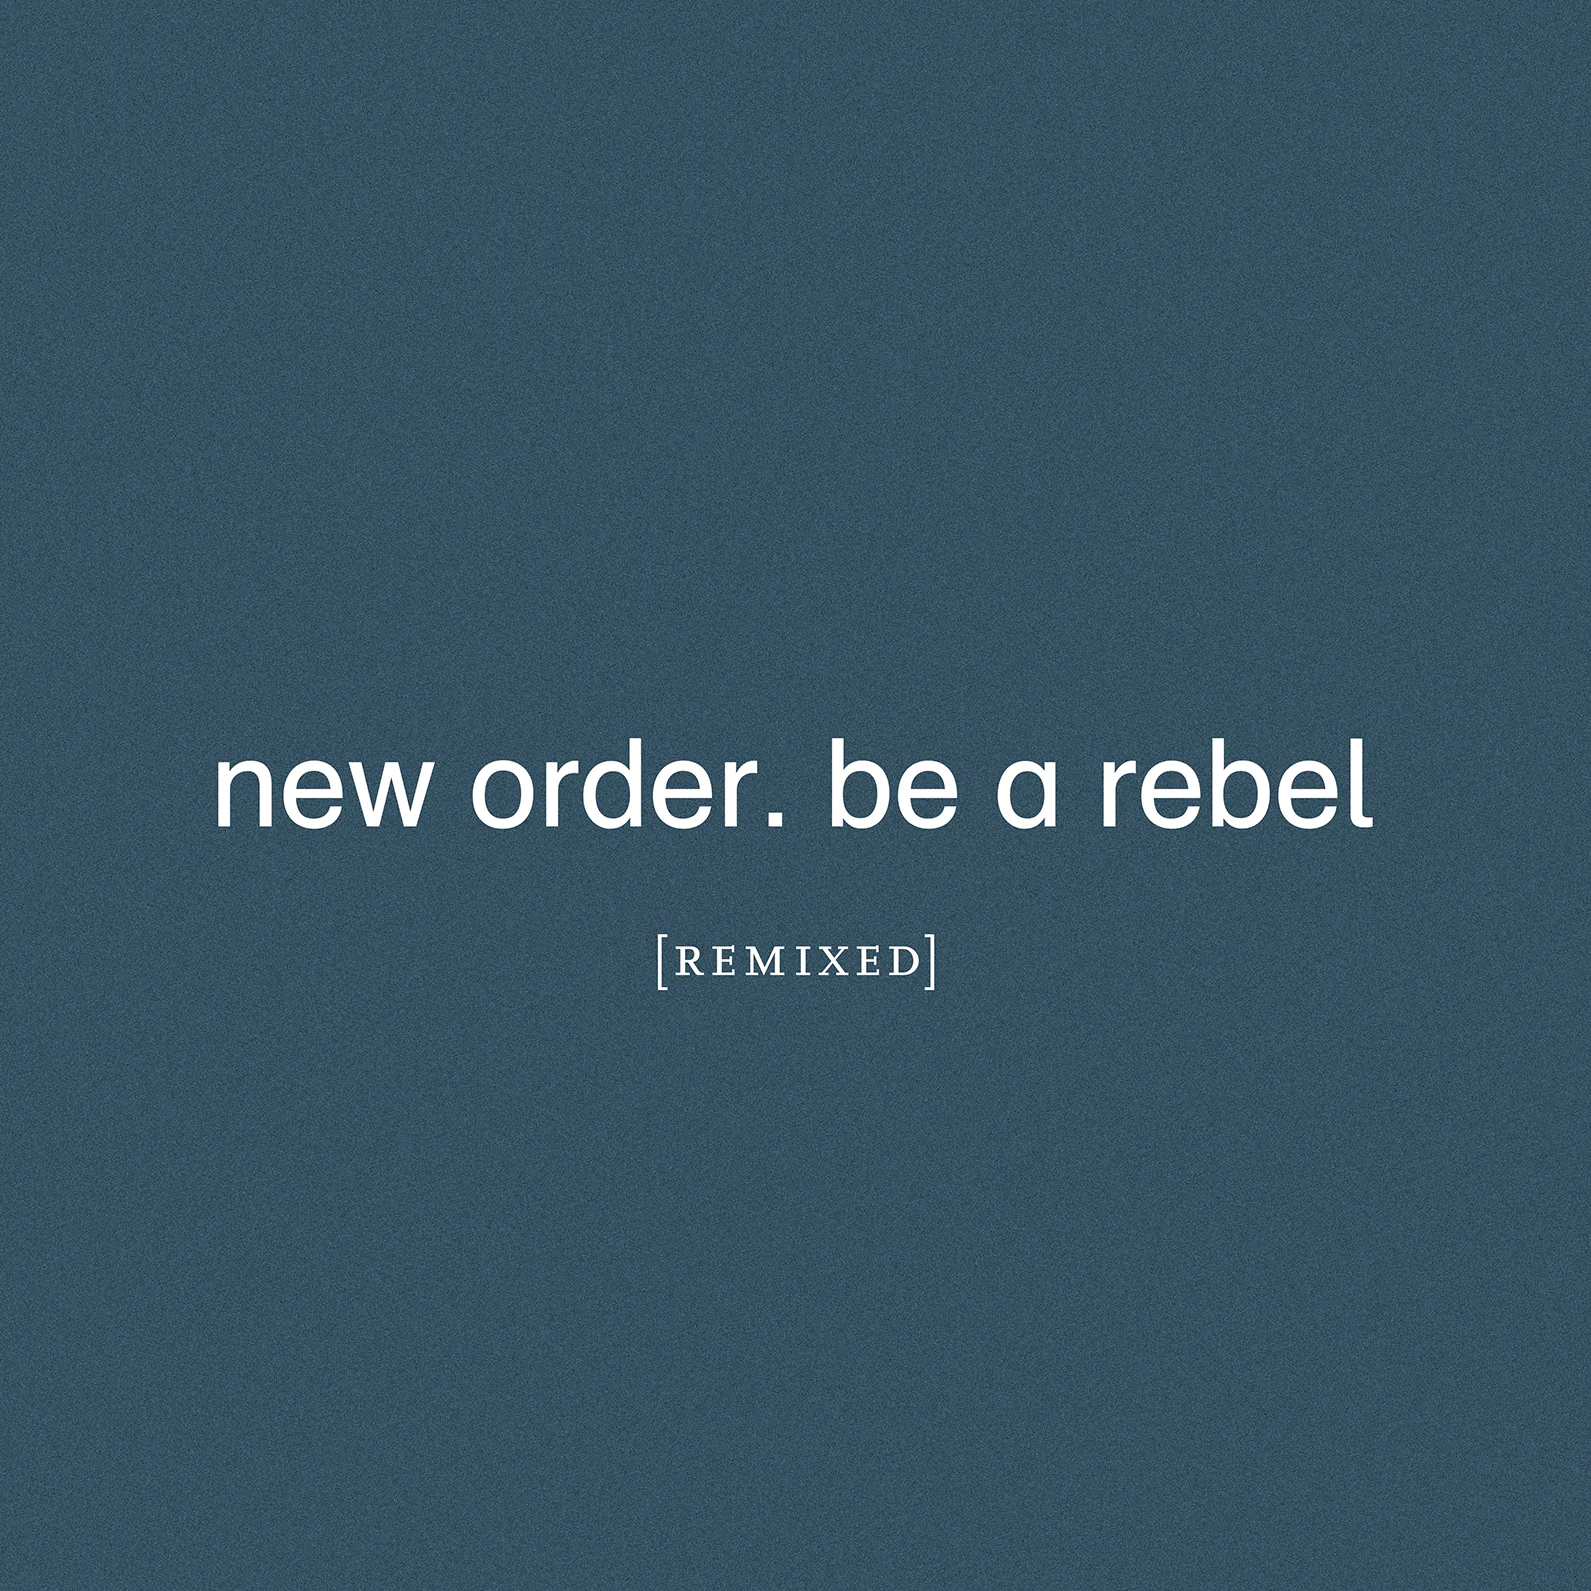 NEW ORDER release ‘Be a Rebel [Arthur Baker Remix]’